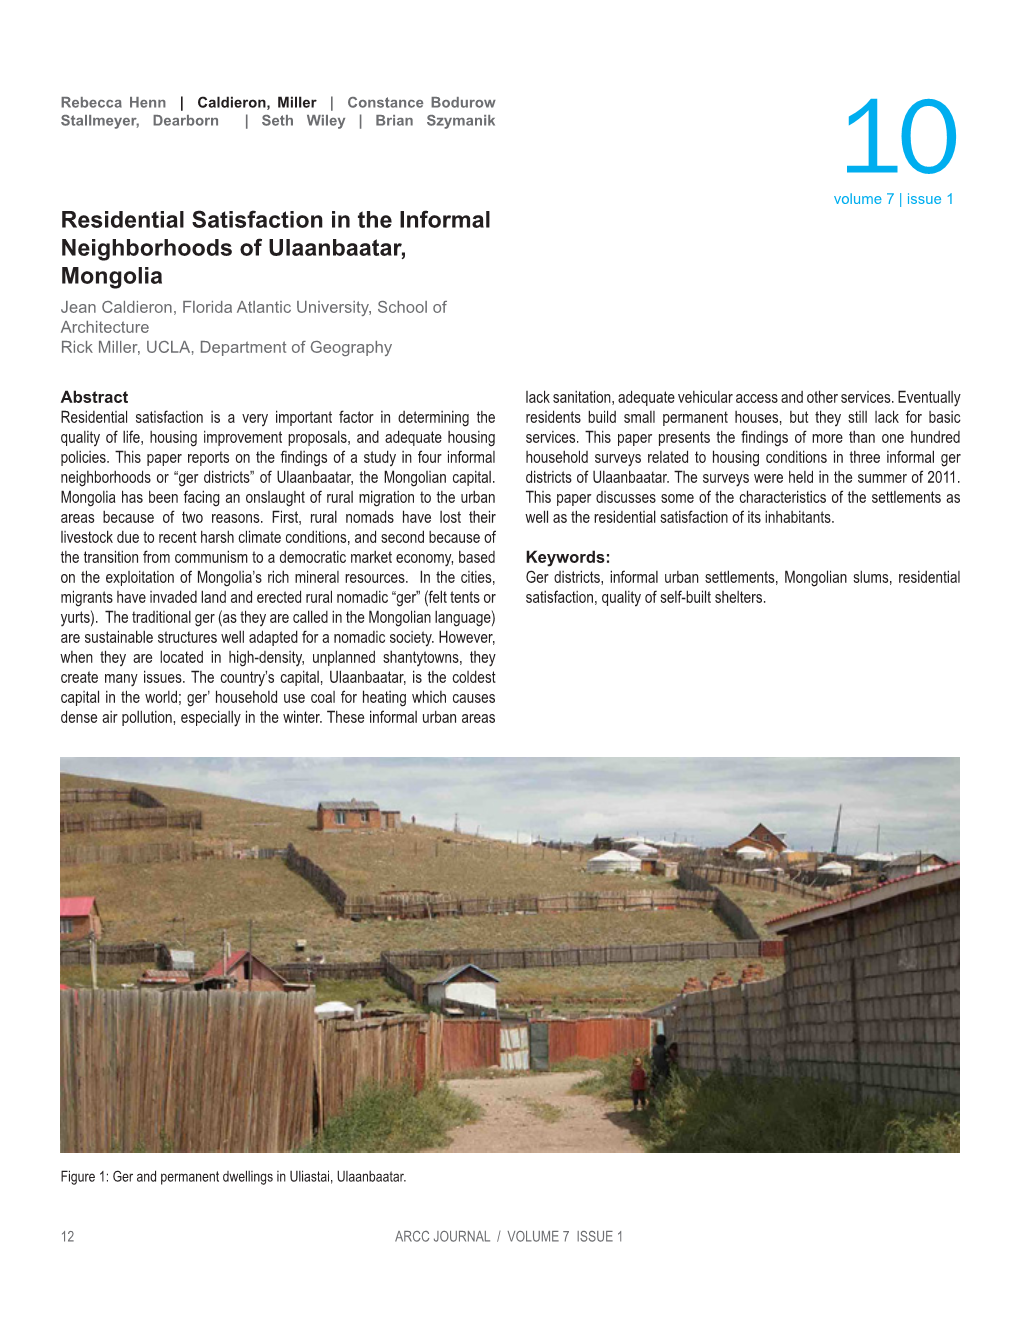 Residential Satisfaction in the Informal Neighborhoods of Ulaanbaatar, Mongolia